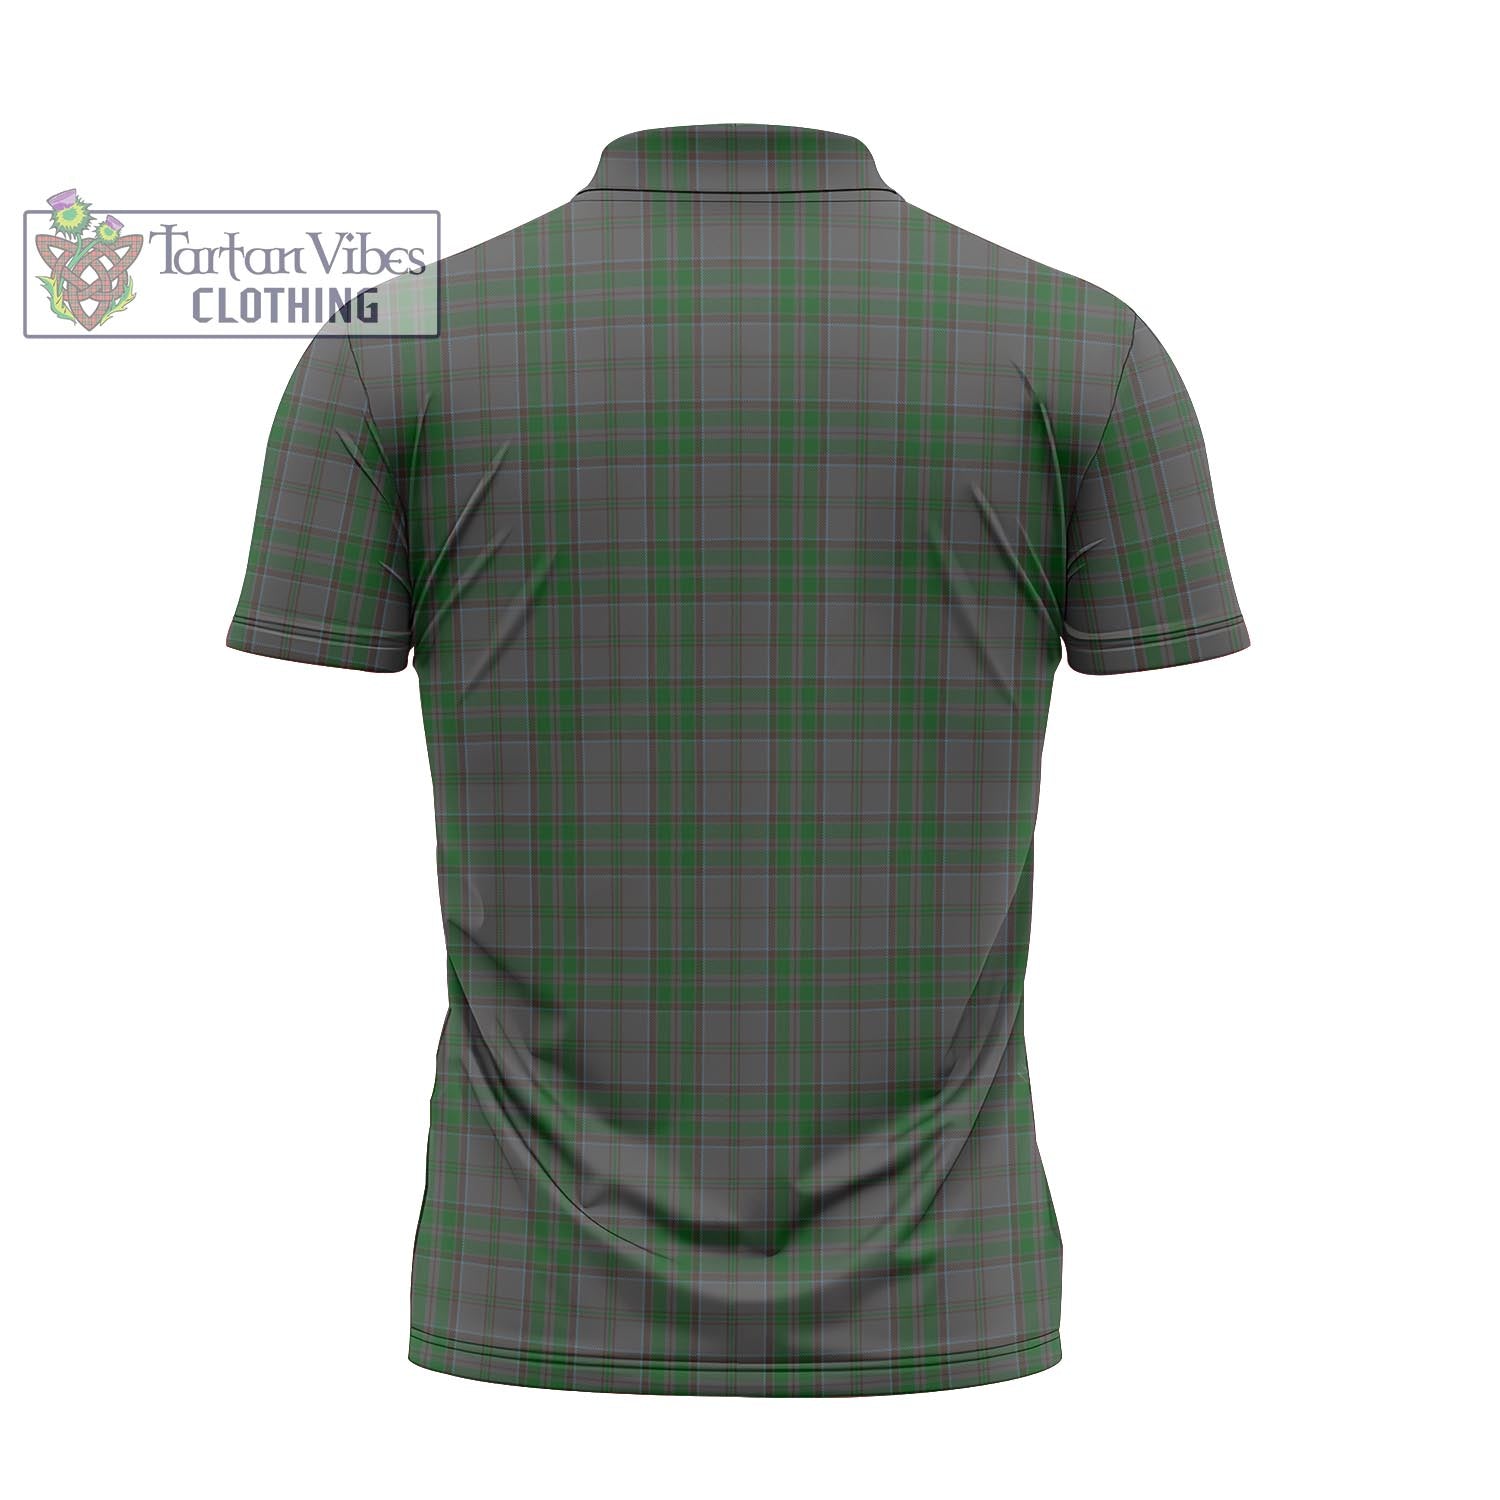 Tartan Vibes Clothing Wicklow County Ireland Tartan Zipper Polo Shirt